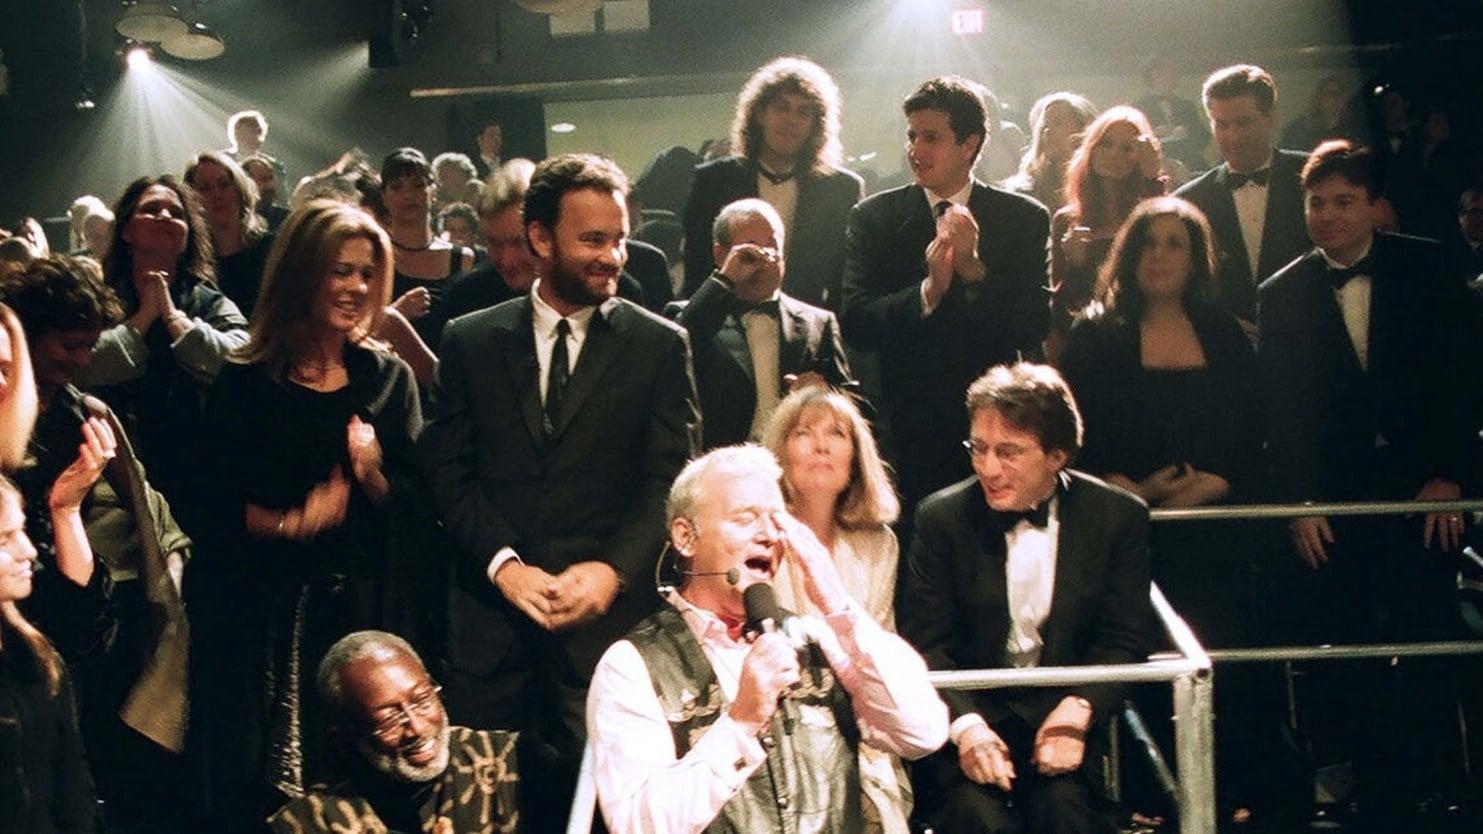 Saturday Night Live: 25th Anniversary Special backdrop